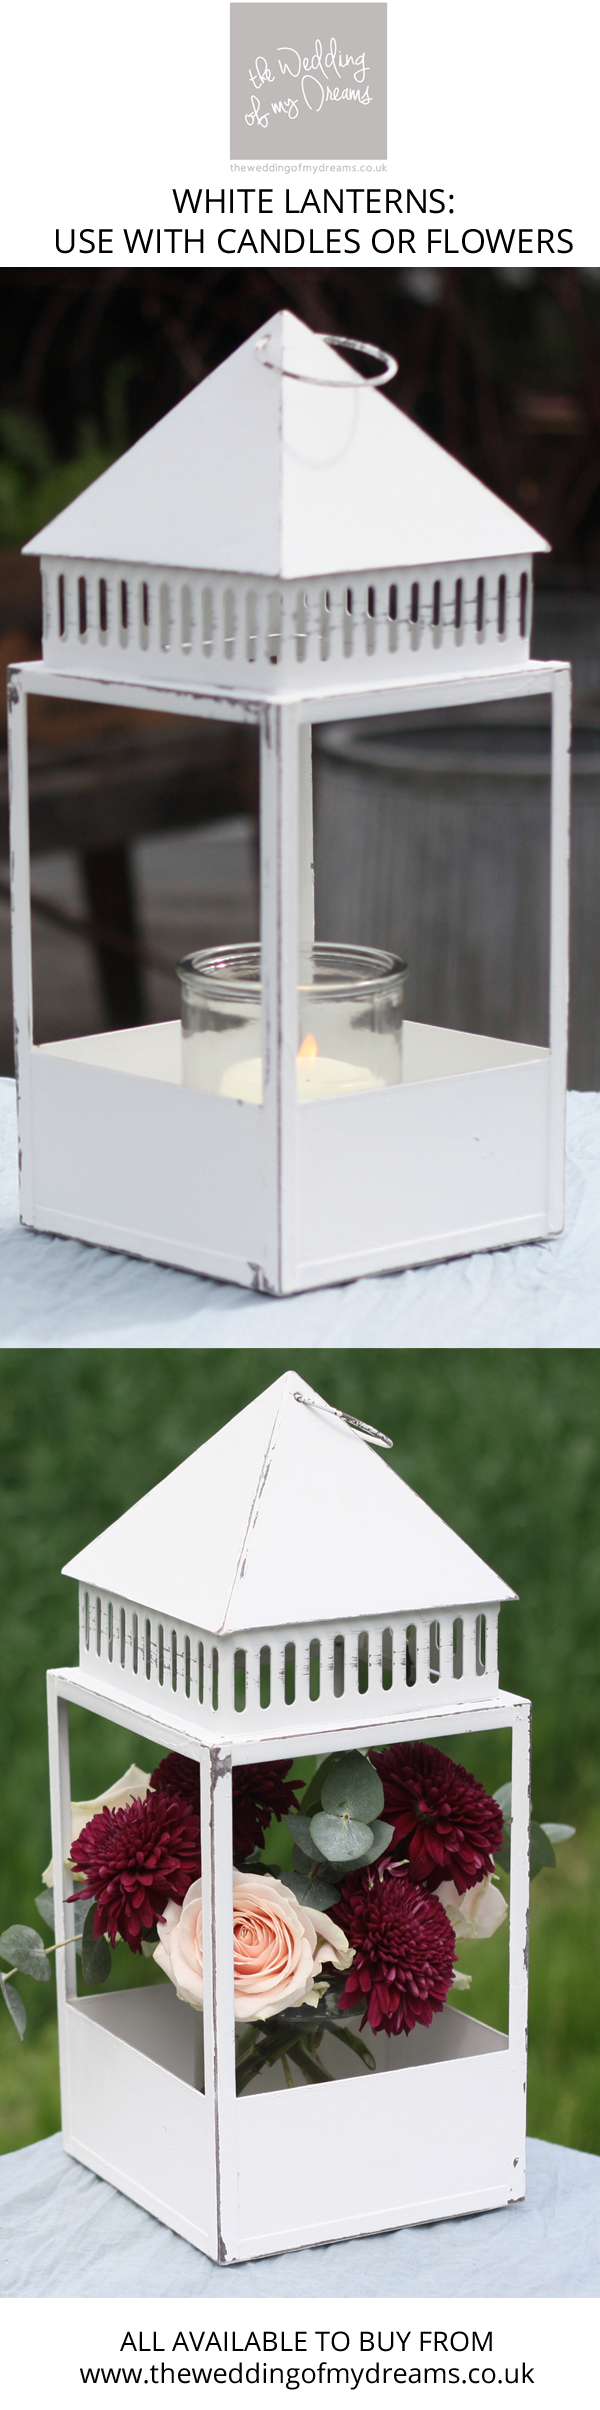 White lanterns for weddings centrepieces